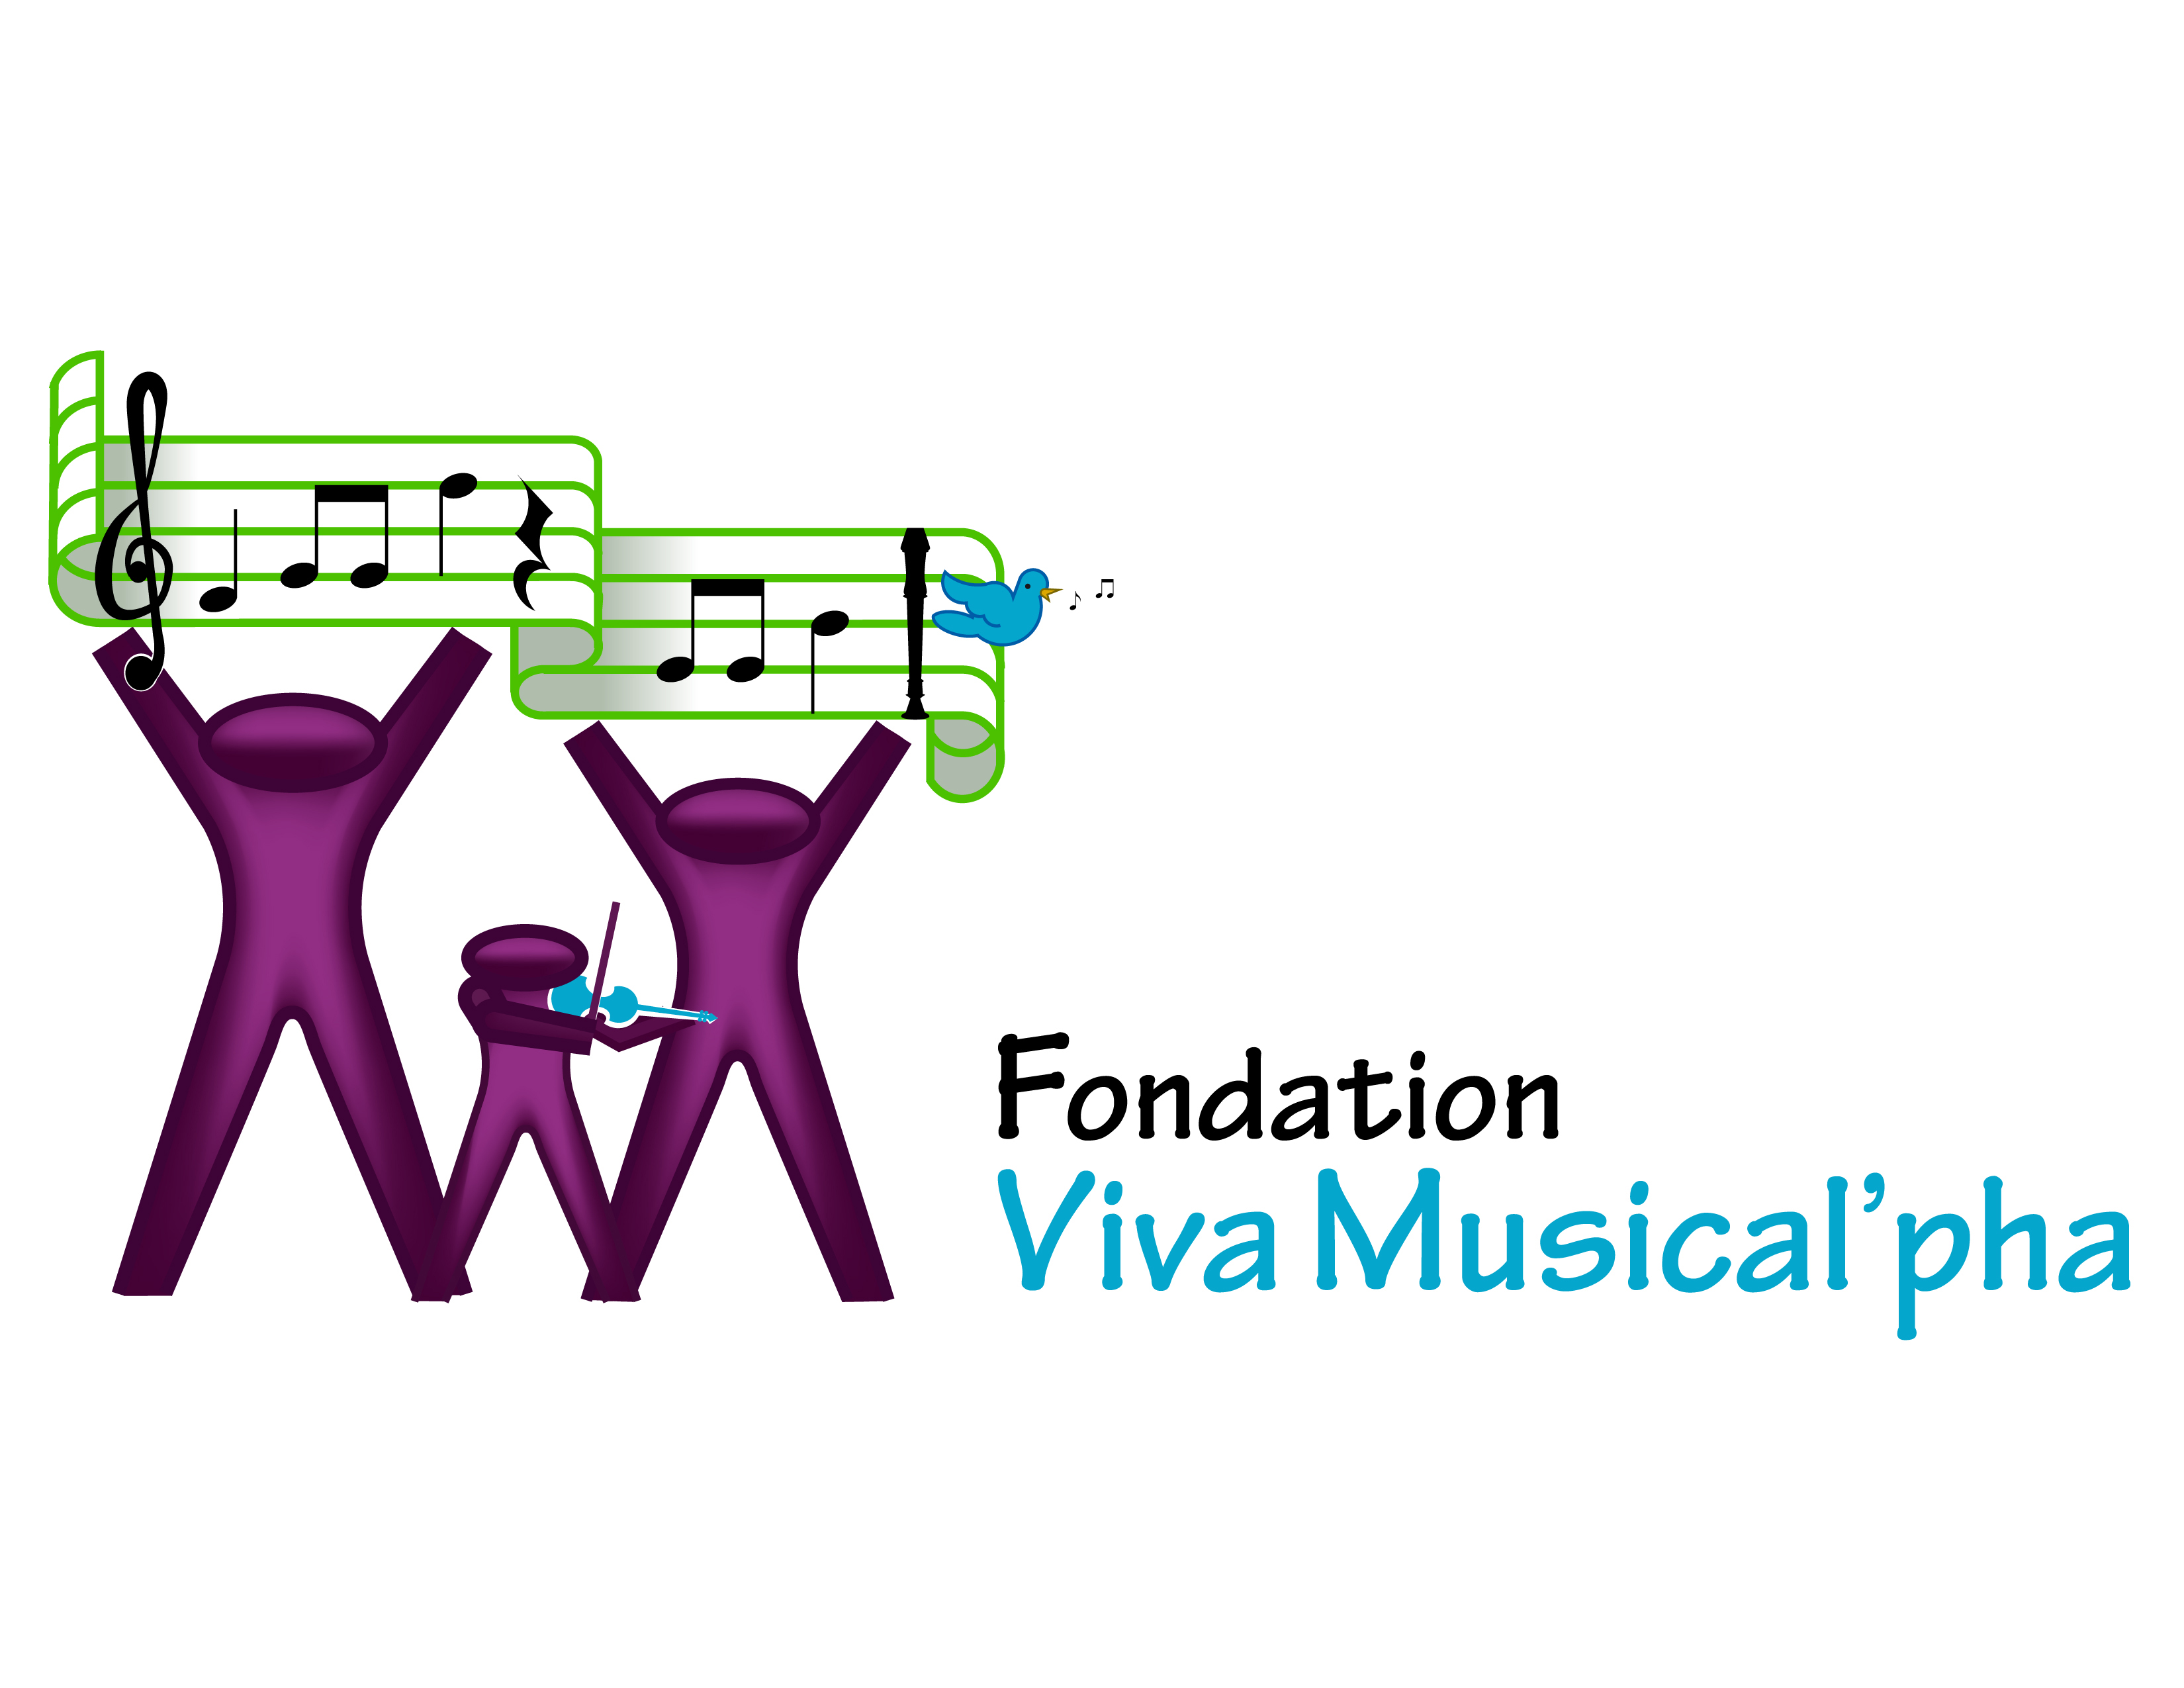 Fondation Viva Musiacl'pha